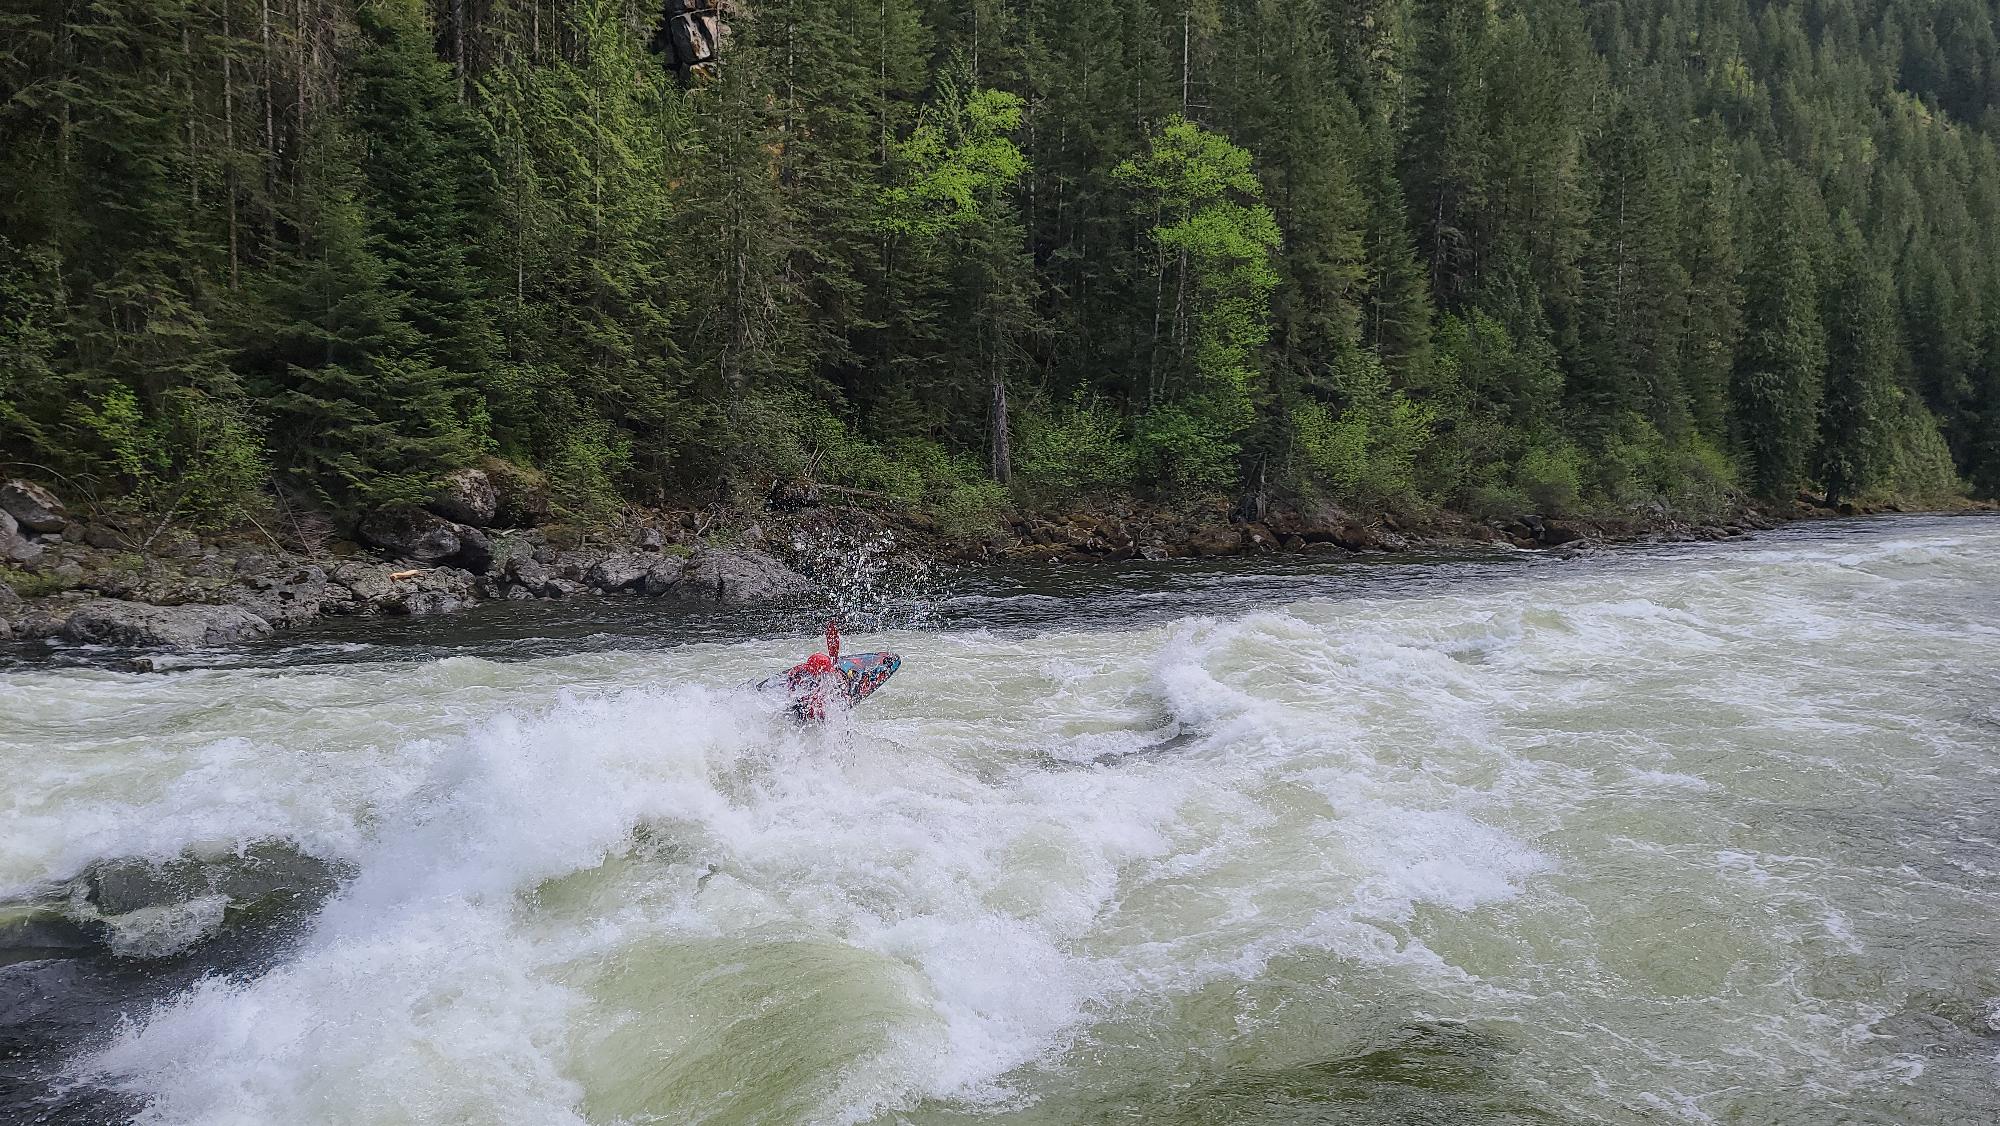 Lochsa Falls via Kayak